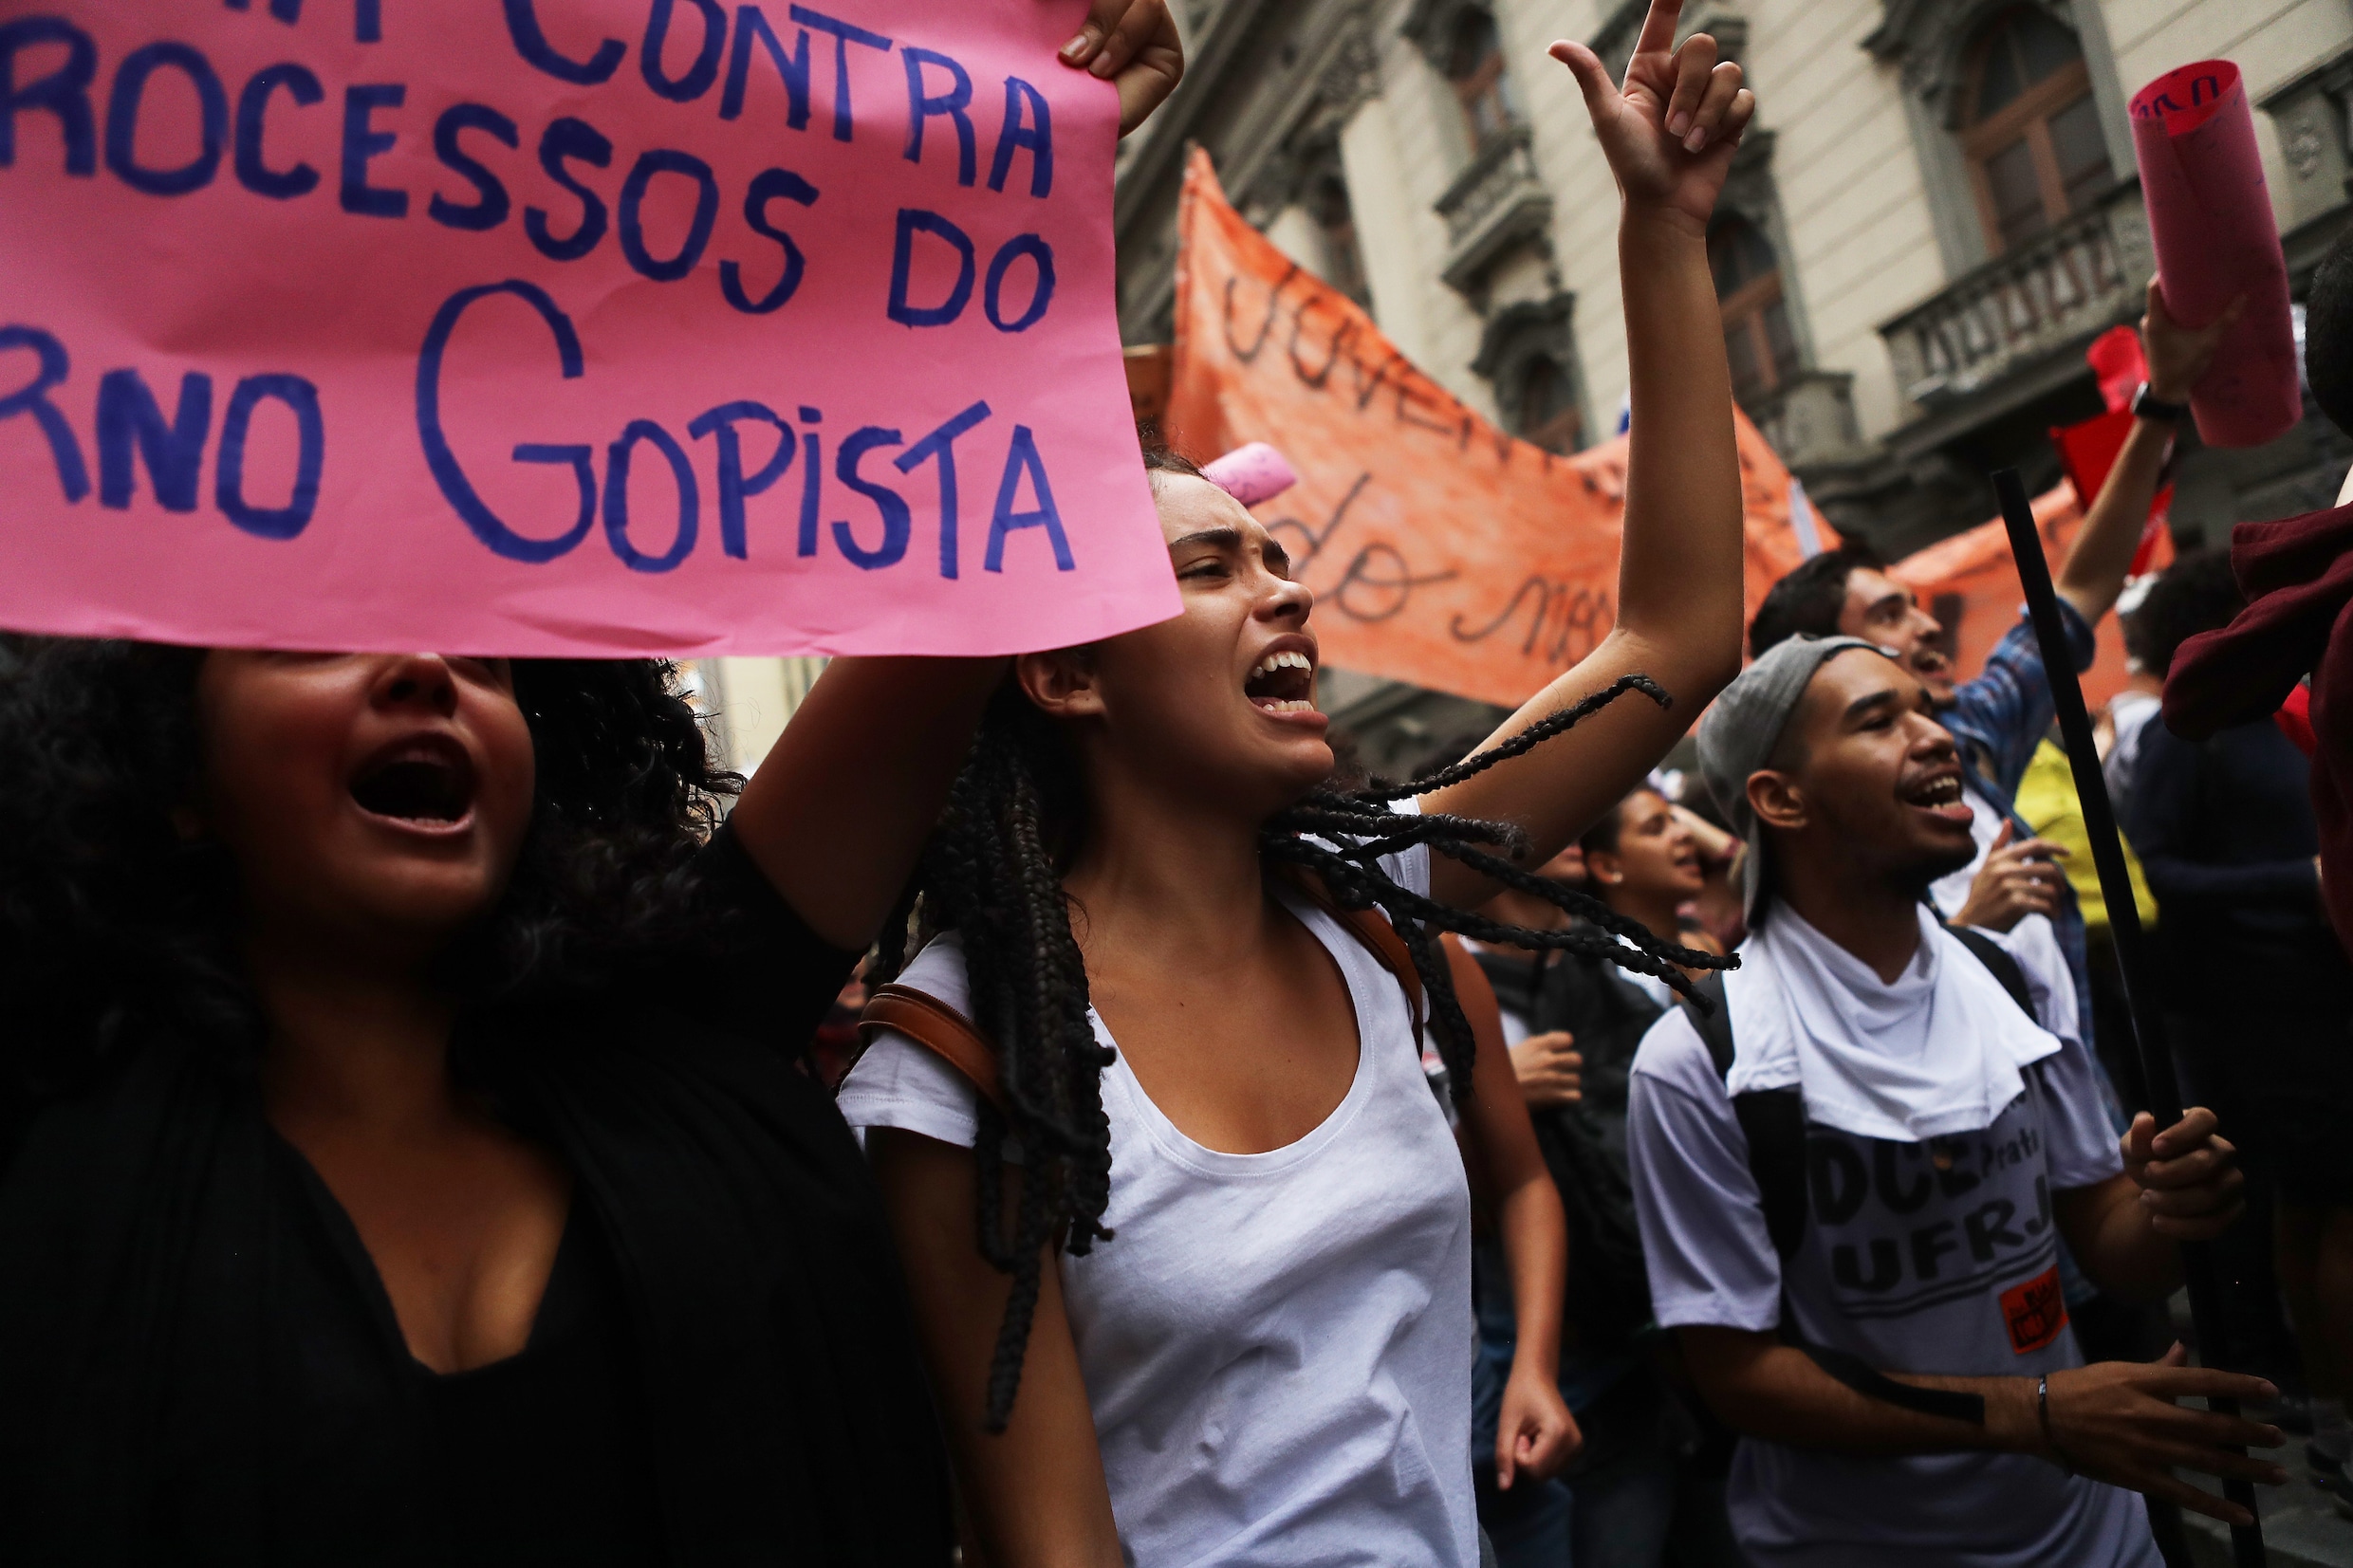 Hevige rellen bij massaprotesten tegen plannen president in Brazilië